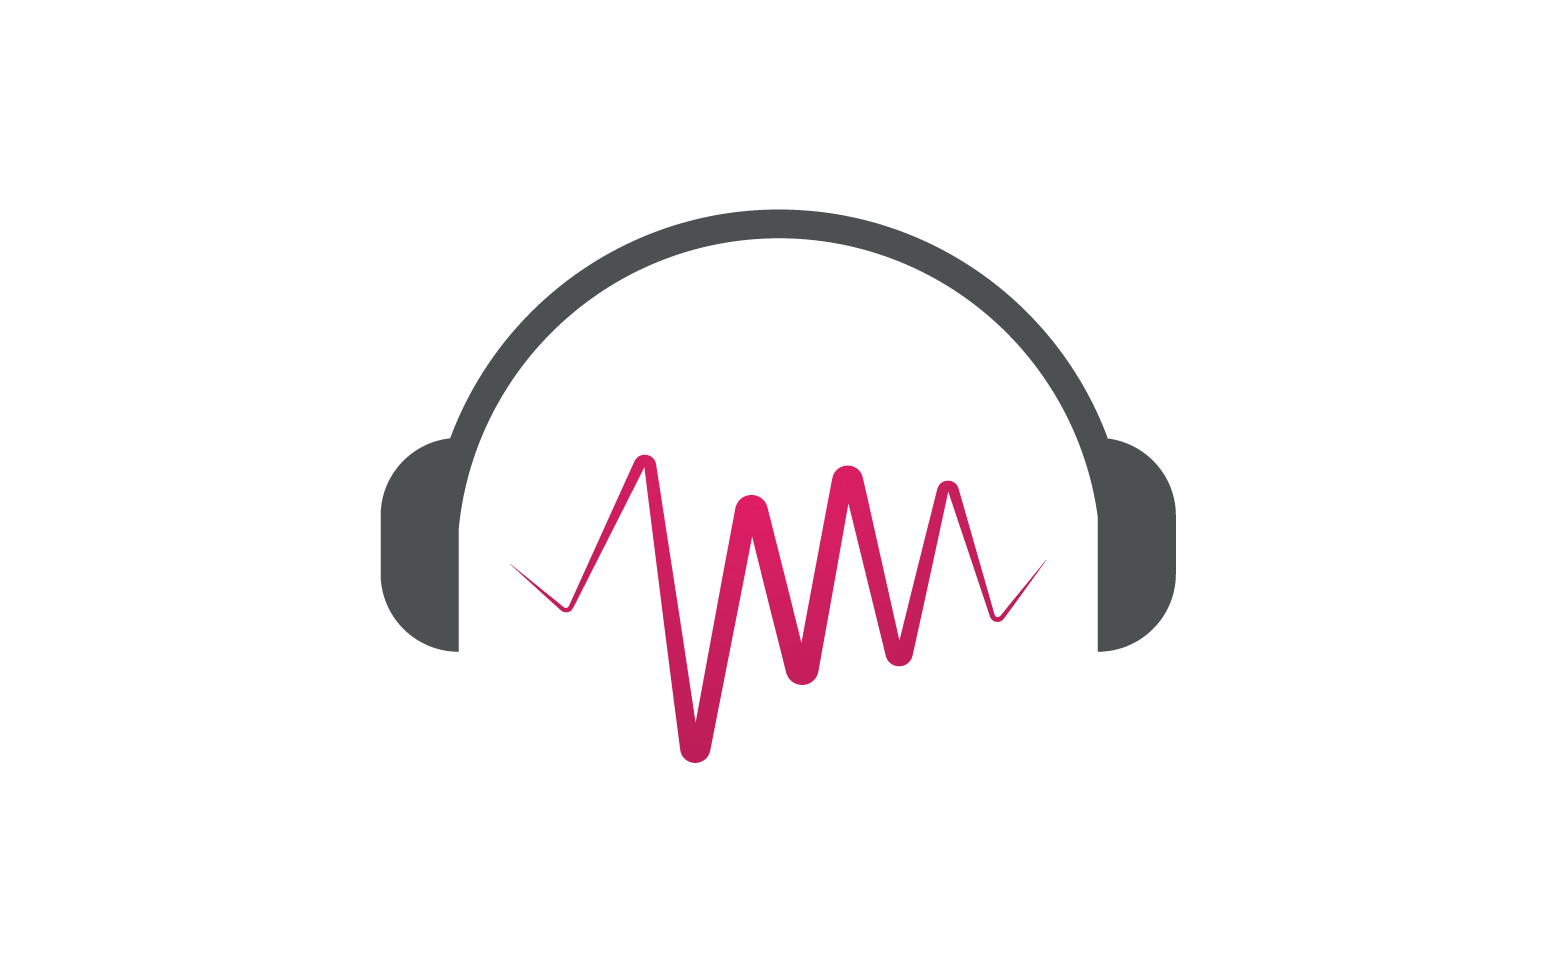 Music sound player app icon logo v8